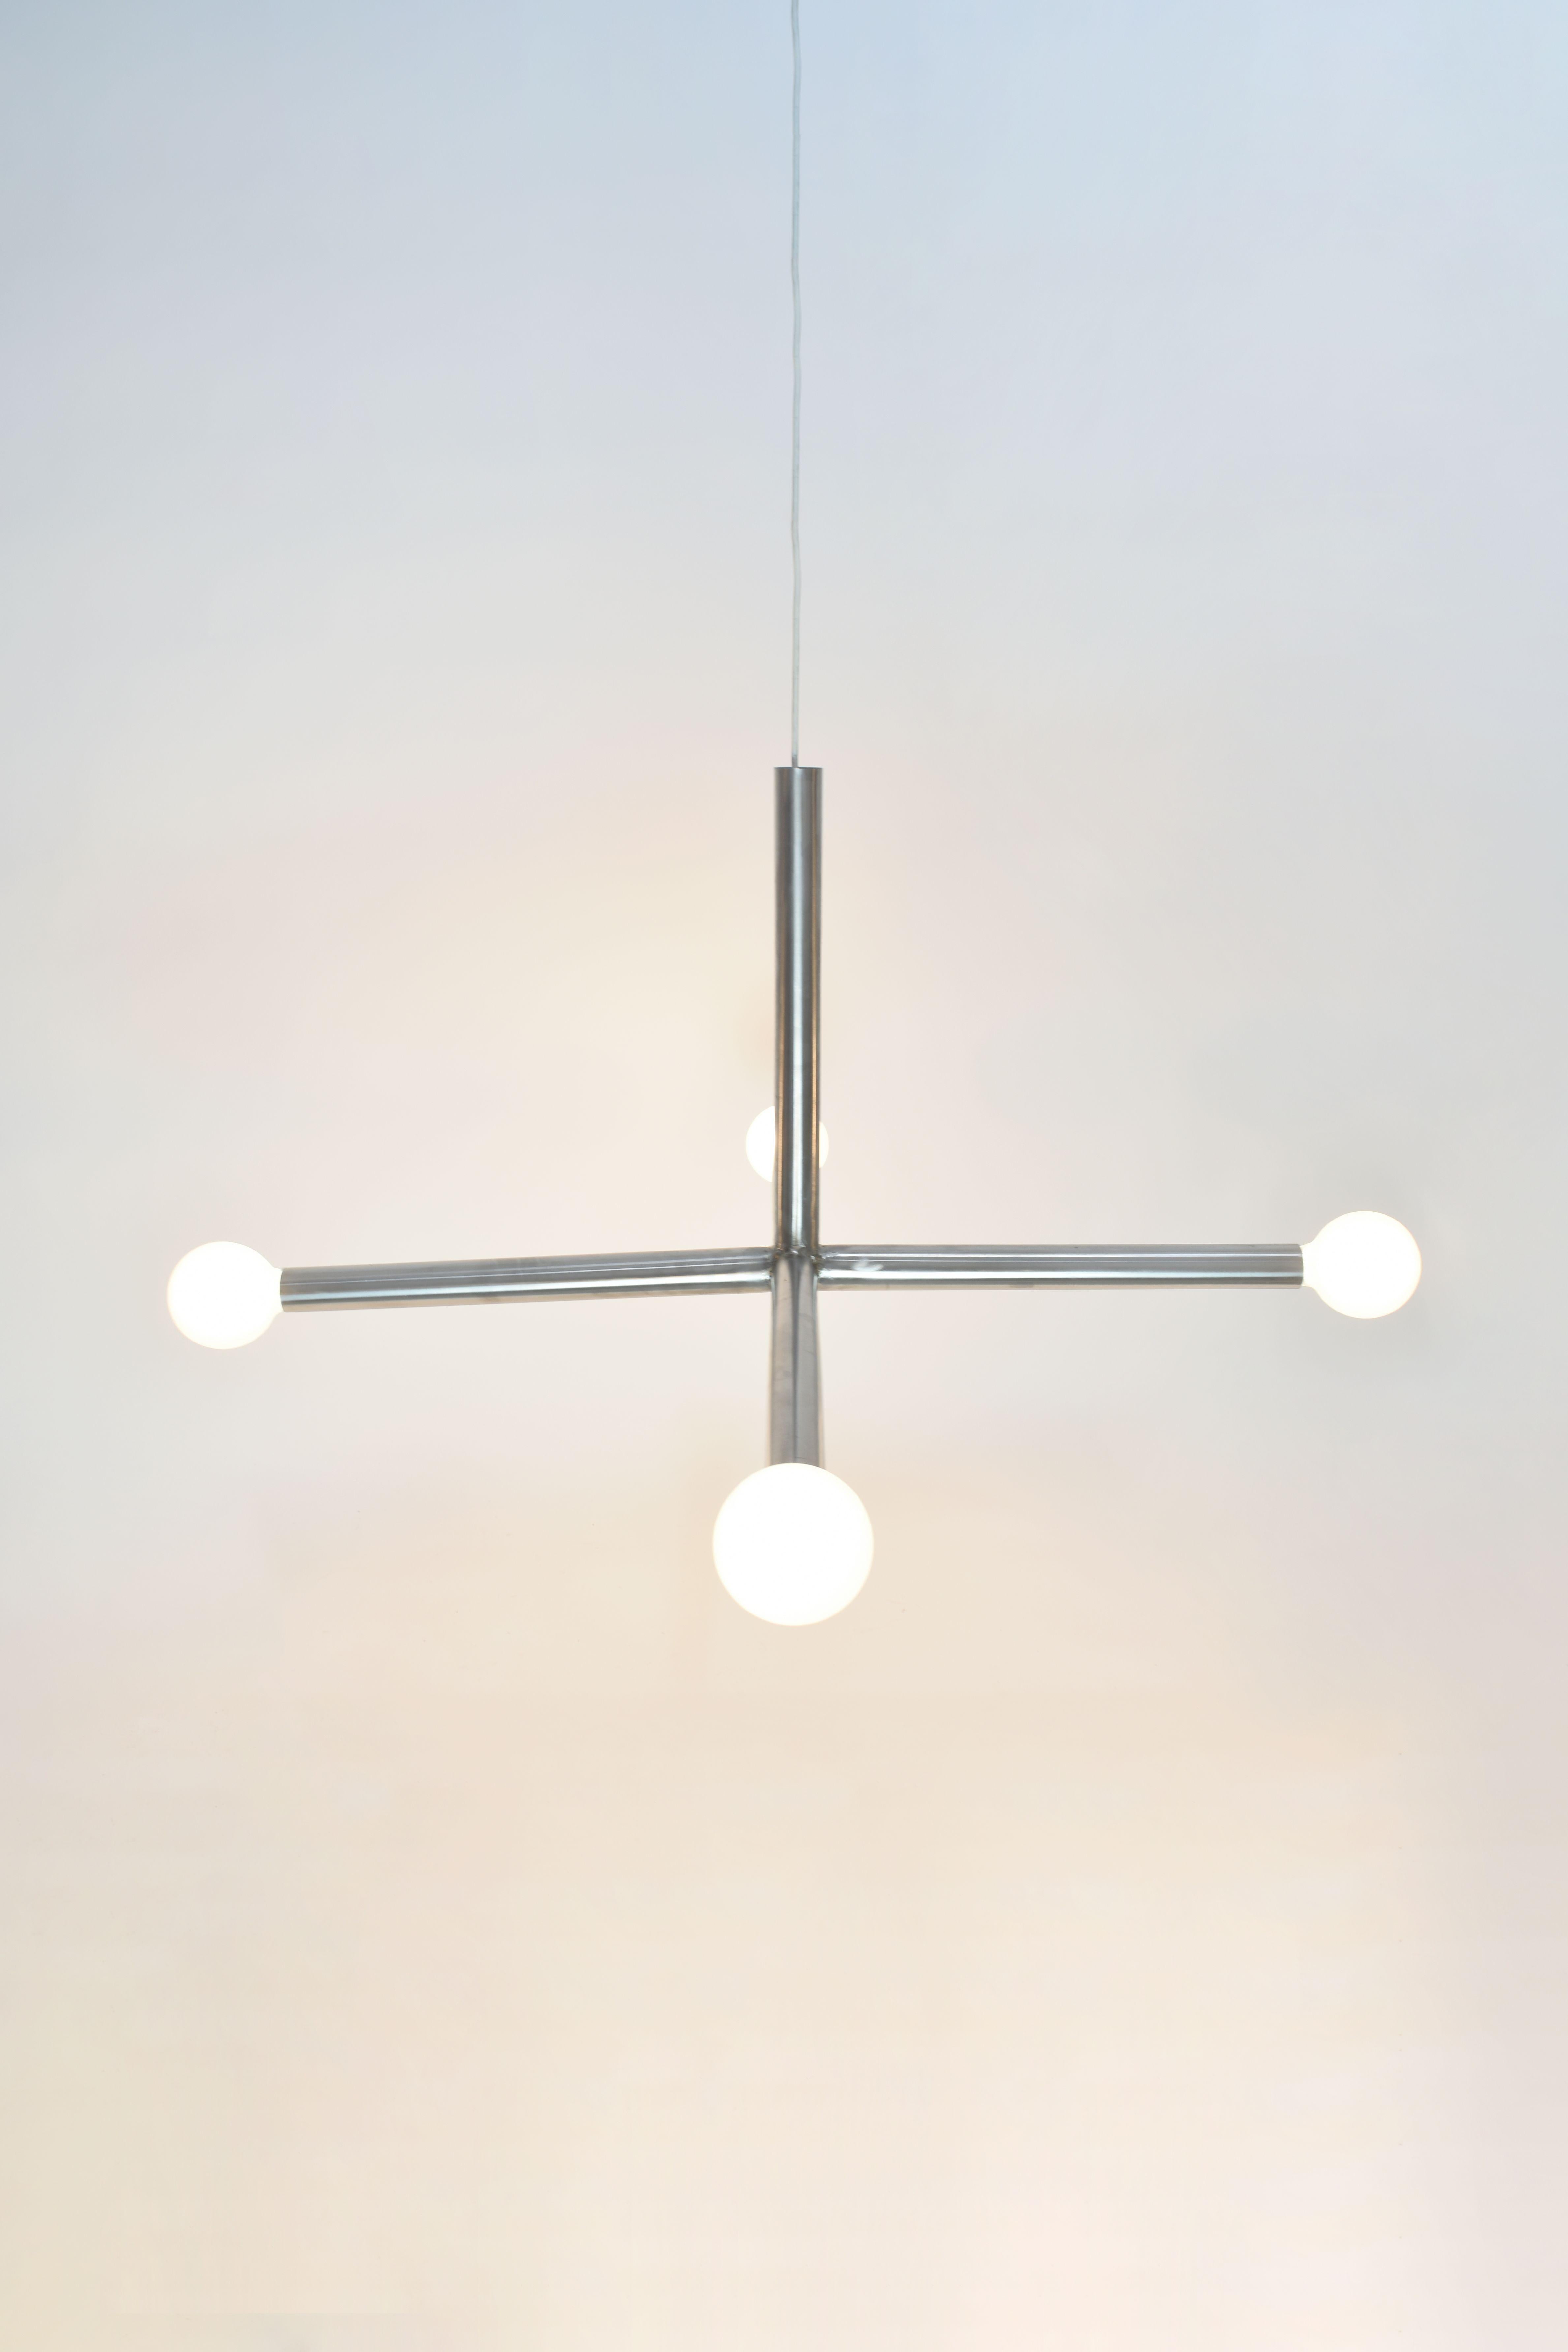 German X Ceiling Lamp by Studio Kuhlmann